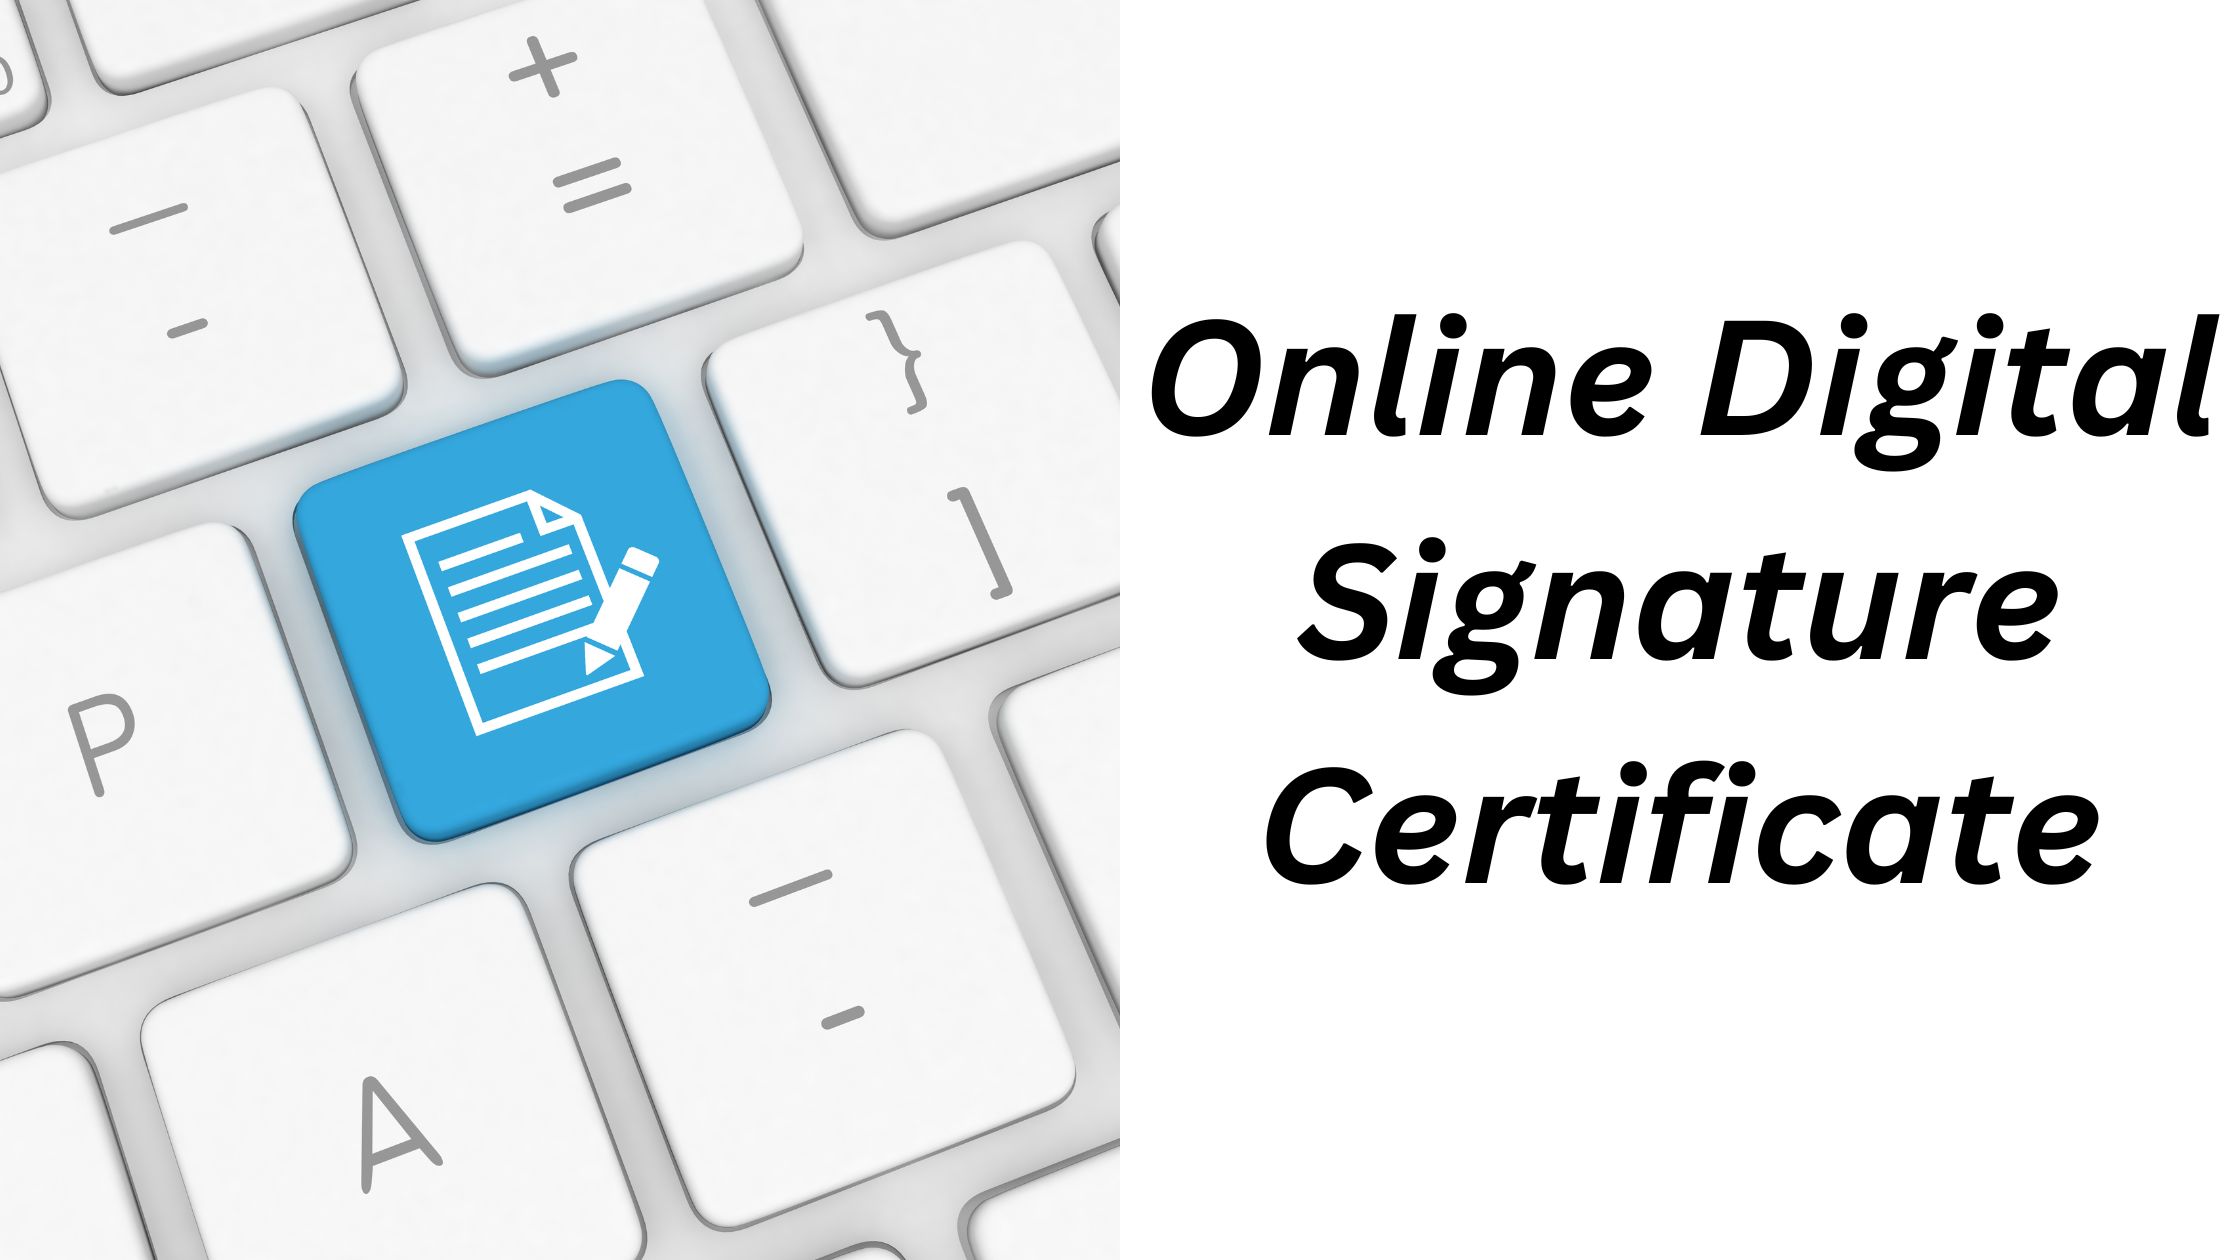 Online Digital Signature Certificate